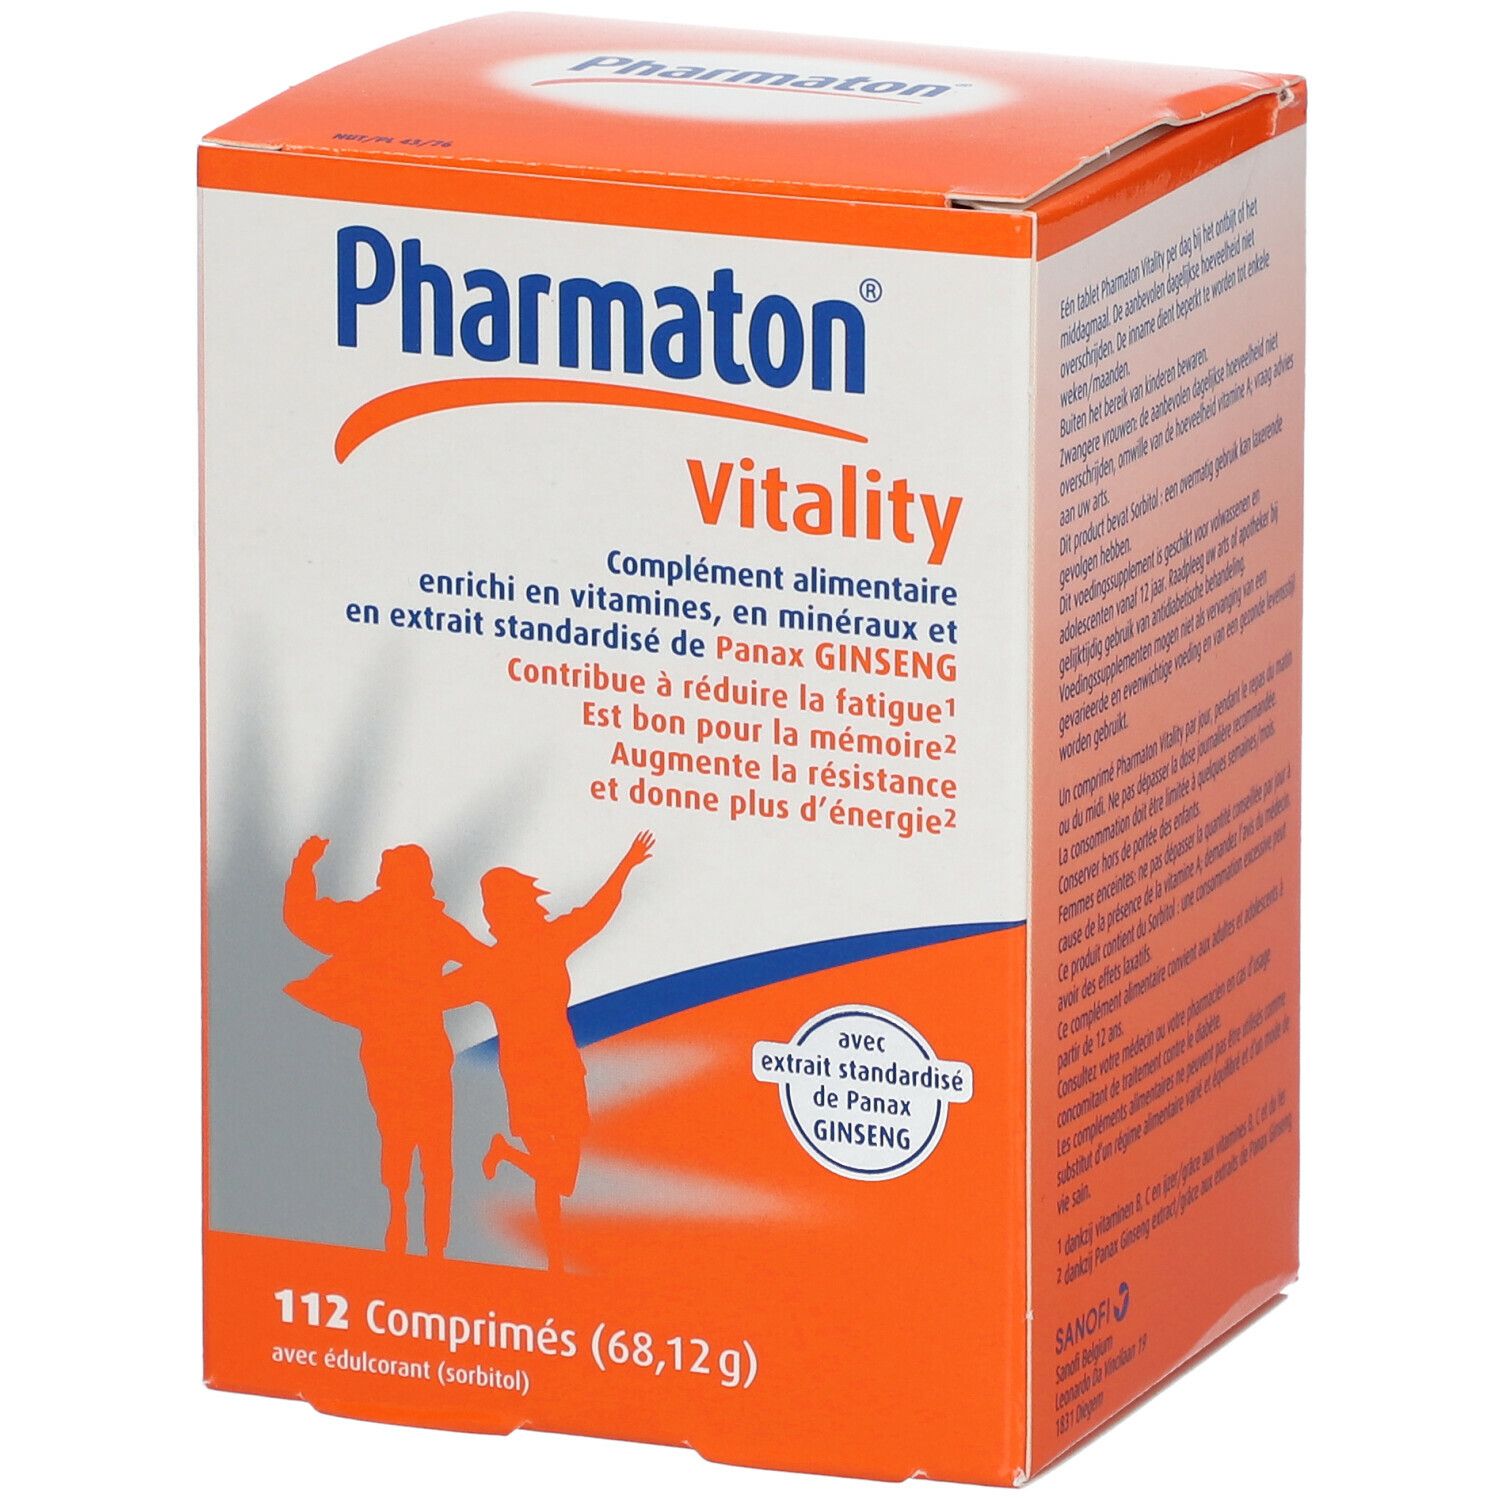 Pharmaton® Vitality